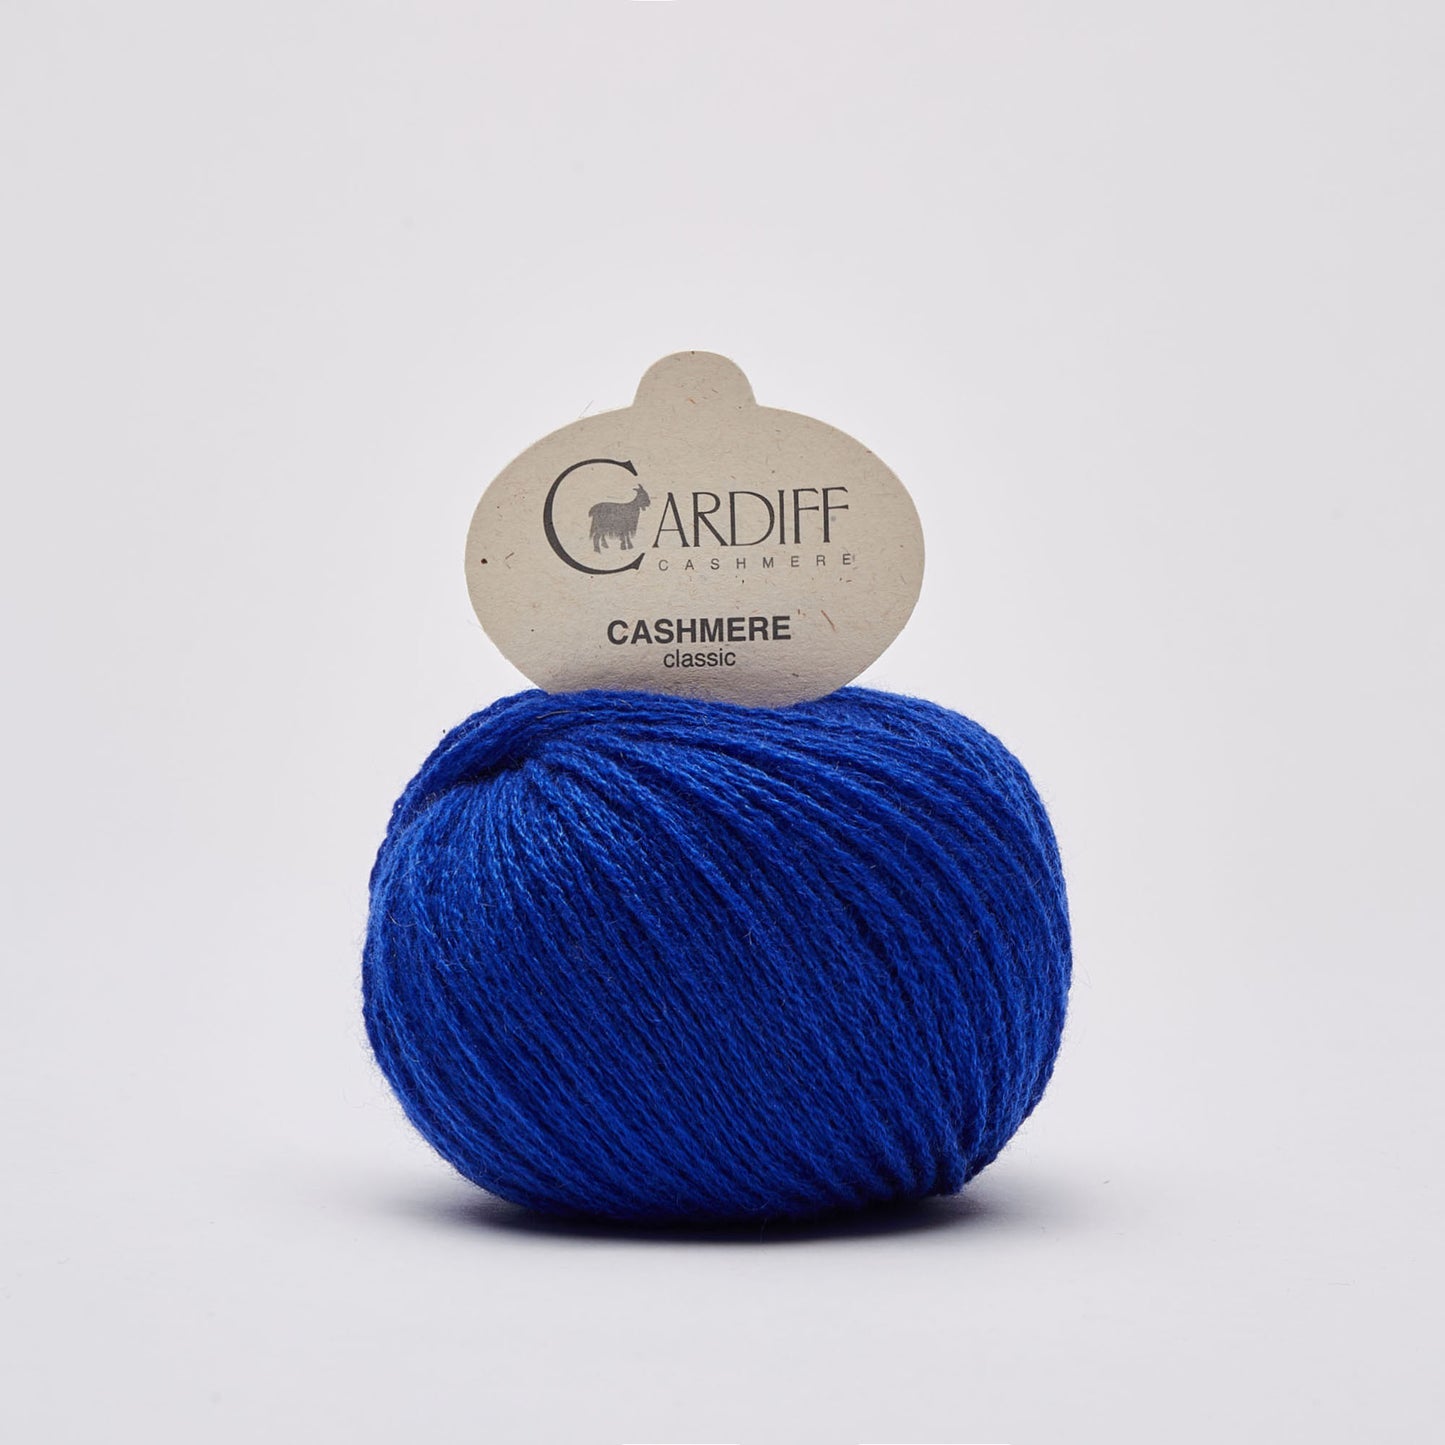 Cardiff CLASSIC gentle yarn, 666, ZAR, comp: 100% Cashmere